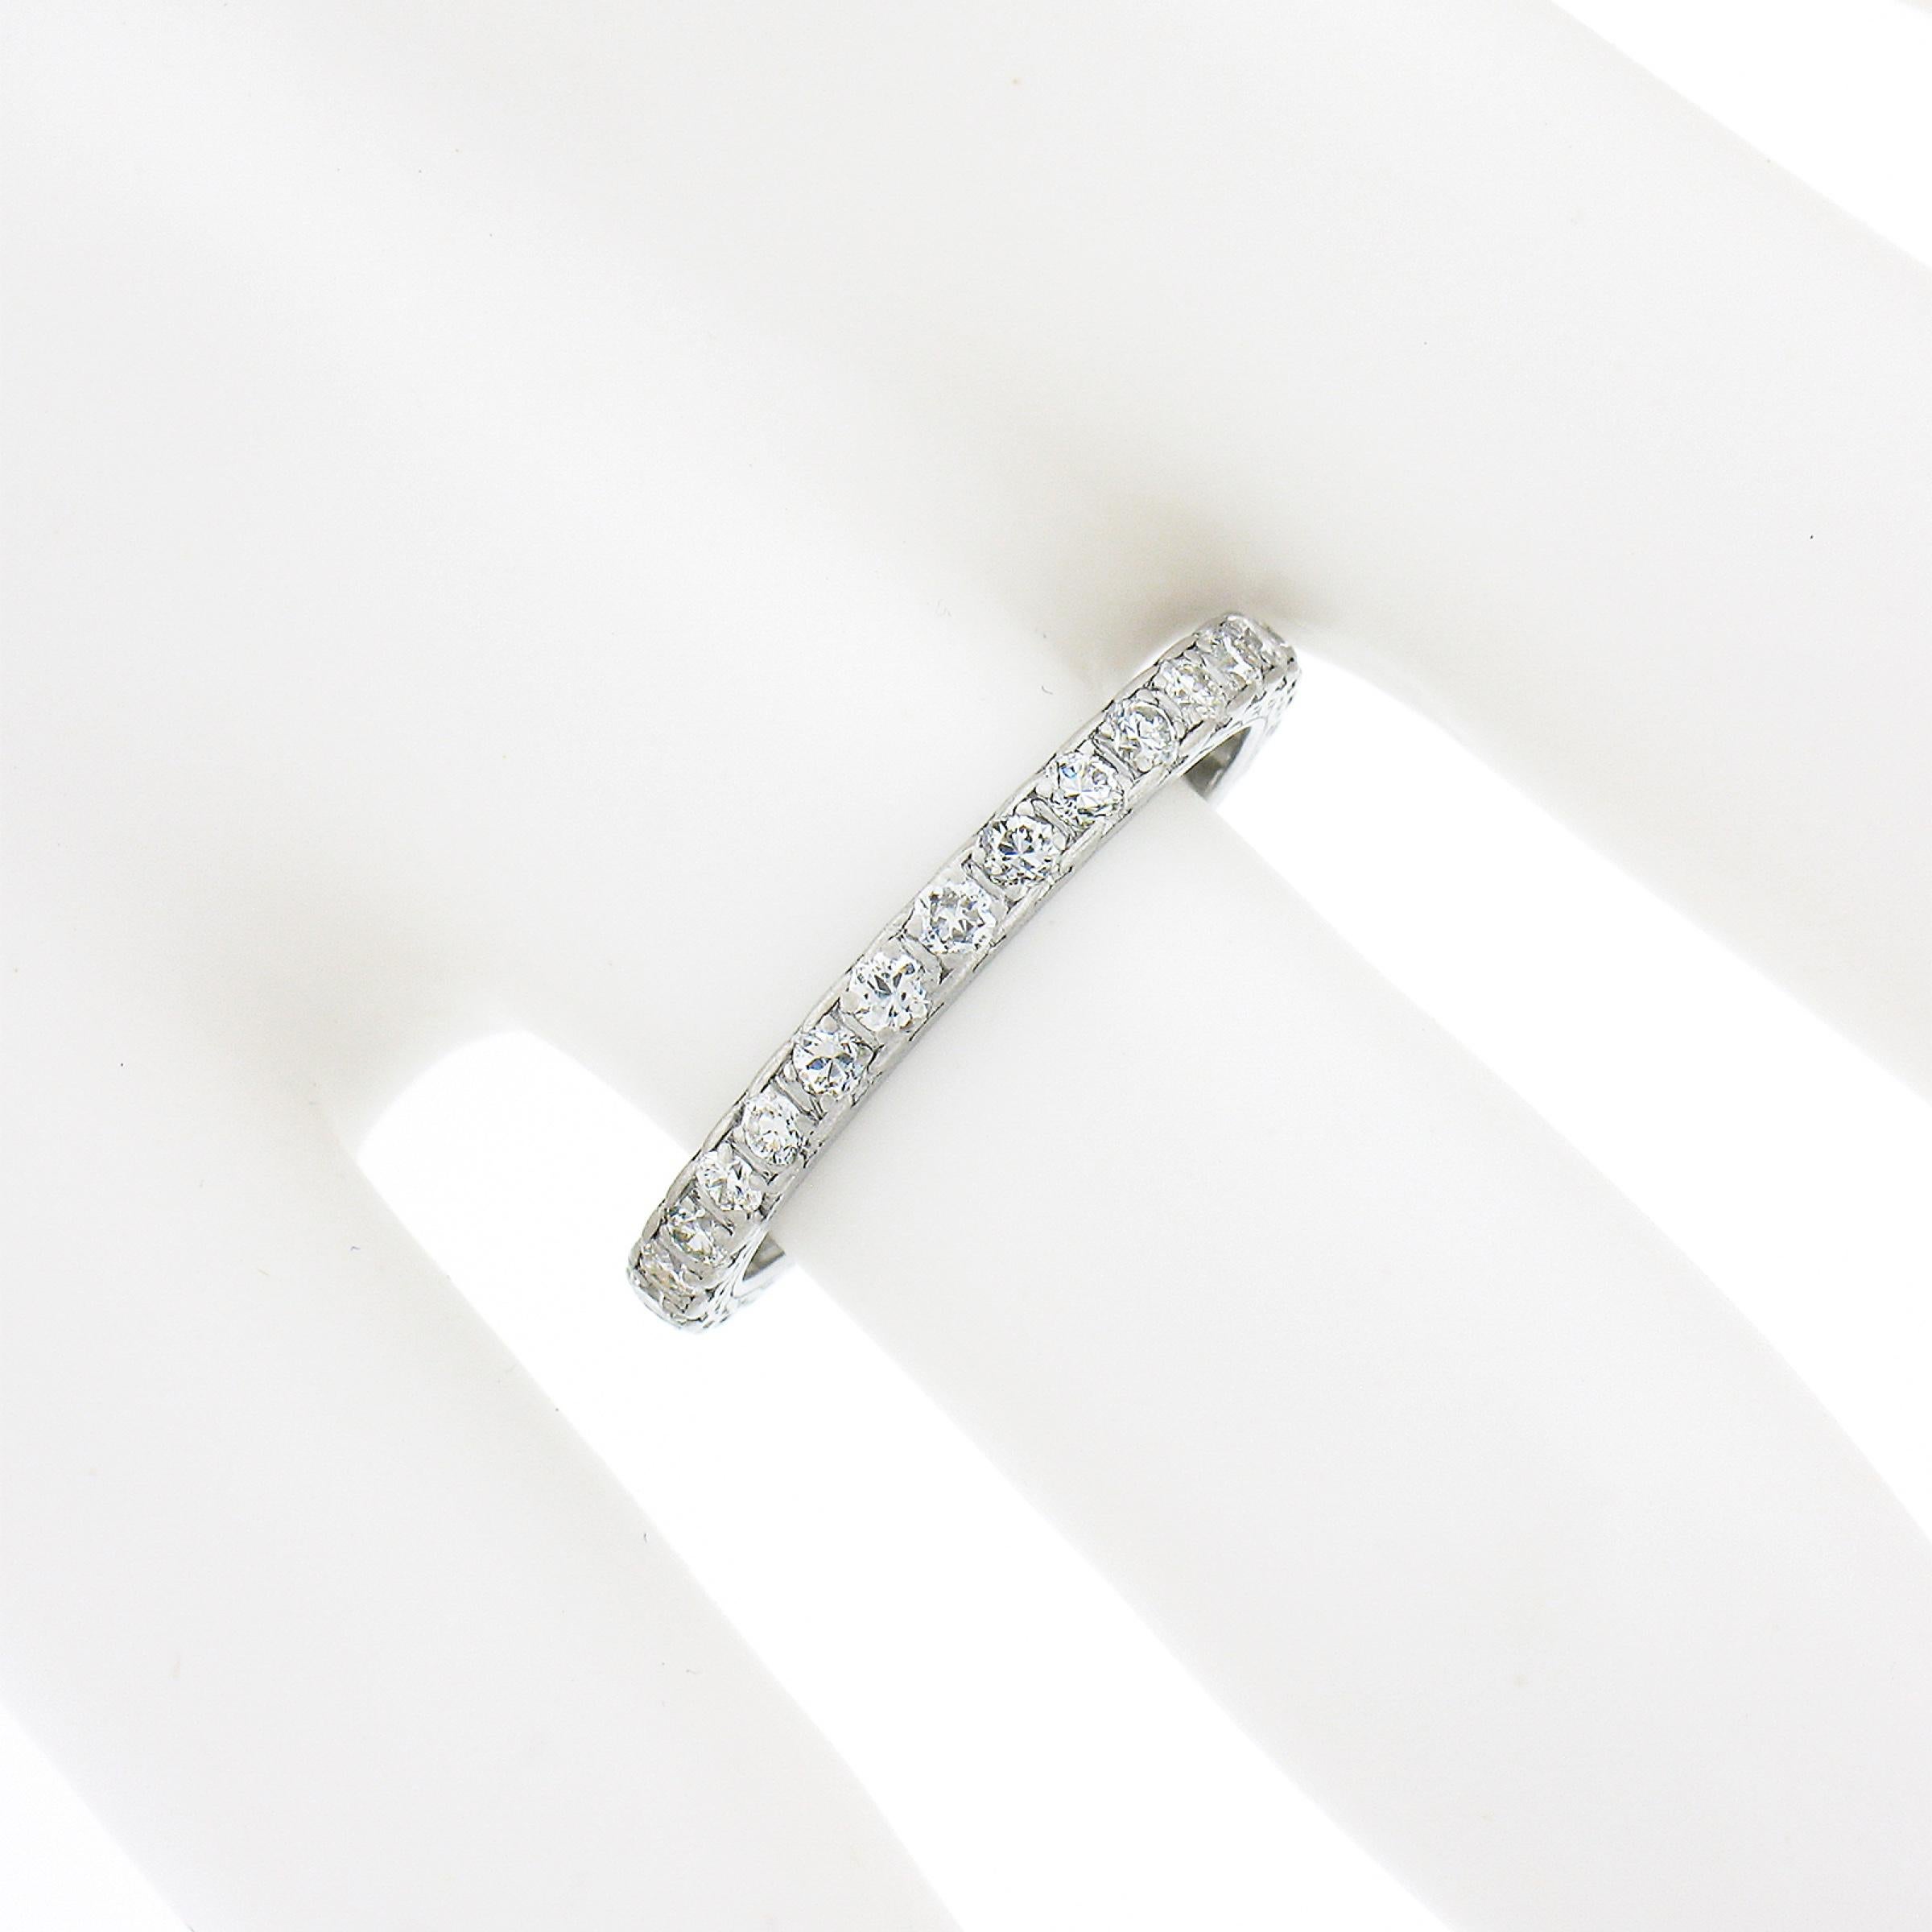 Antique Art Deco Platinum 0.78ct Pave Old Cut Diamond Eternity Wedding Band Ring For Sale 2